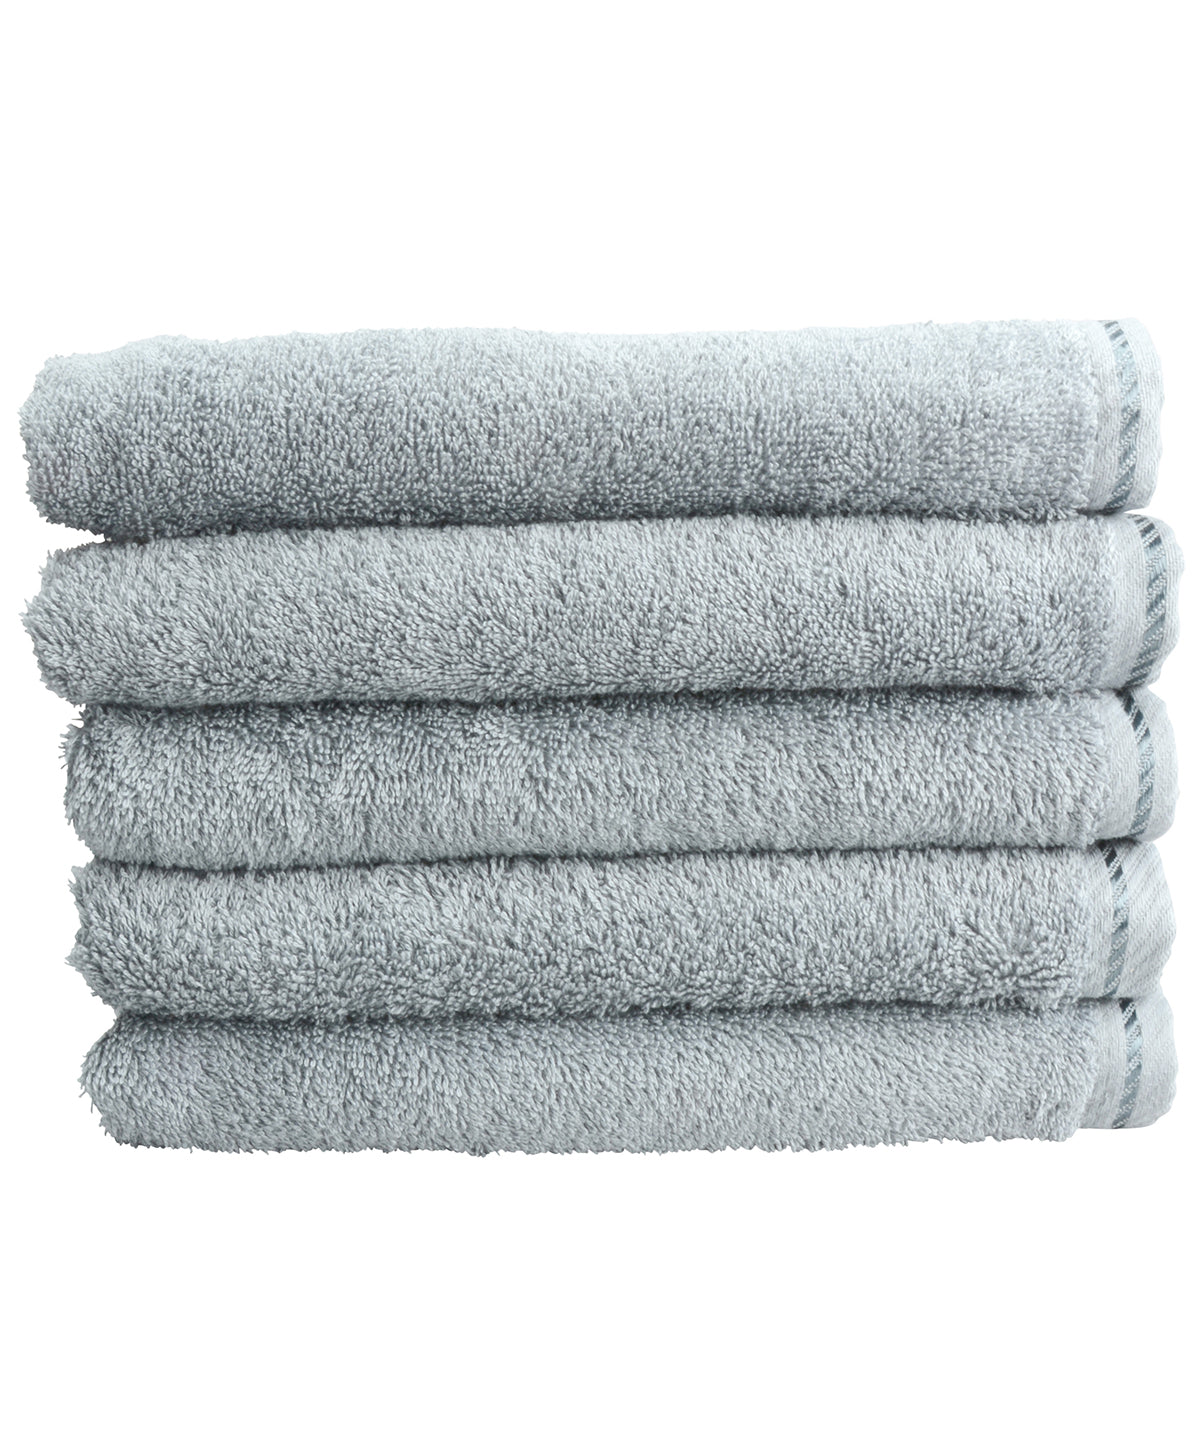 Personalised Towels - Light Grey A&R Towels ARTG® Hand towel